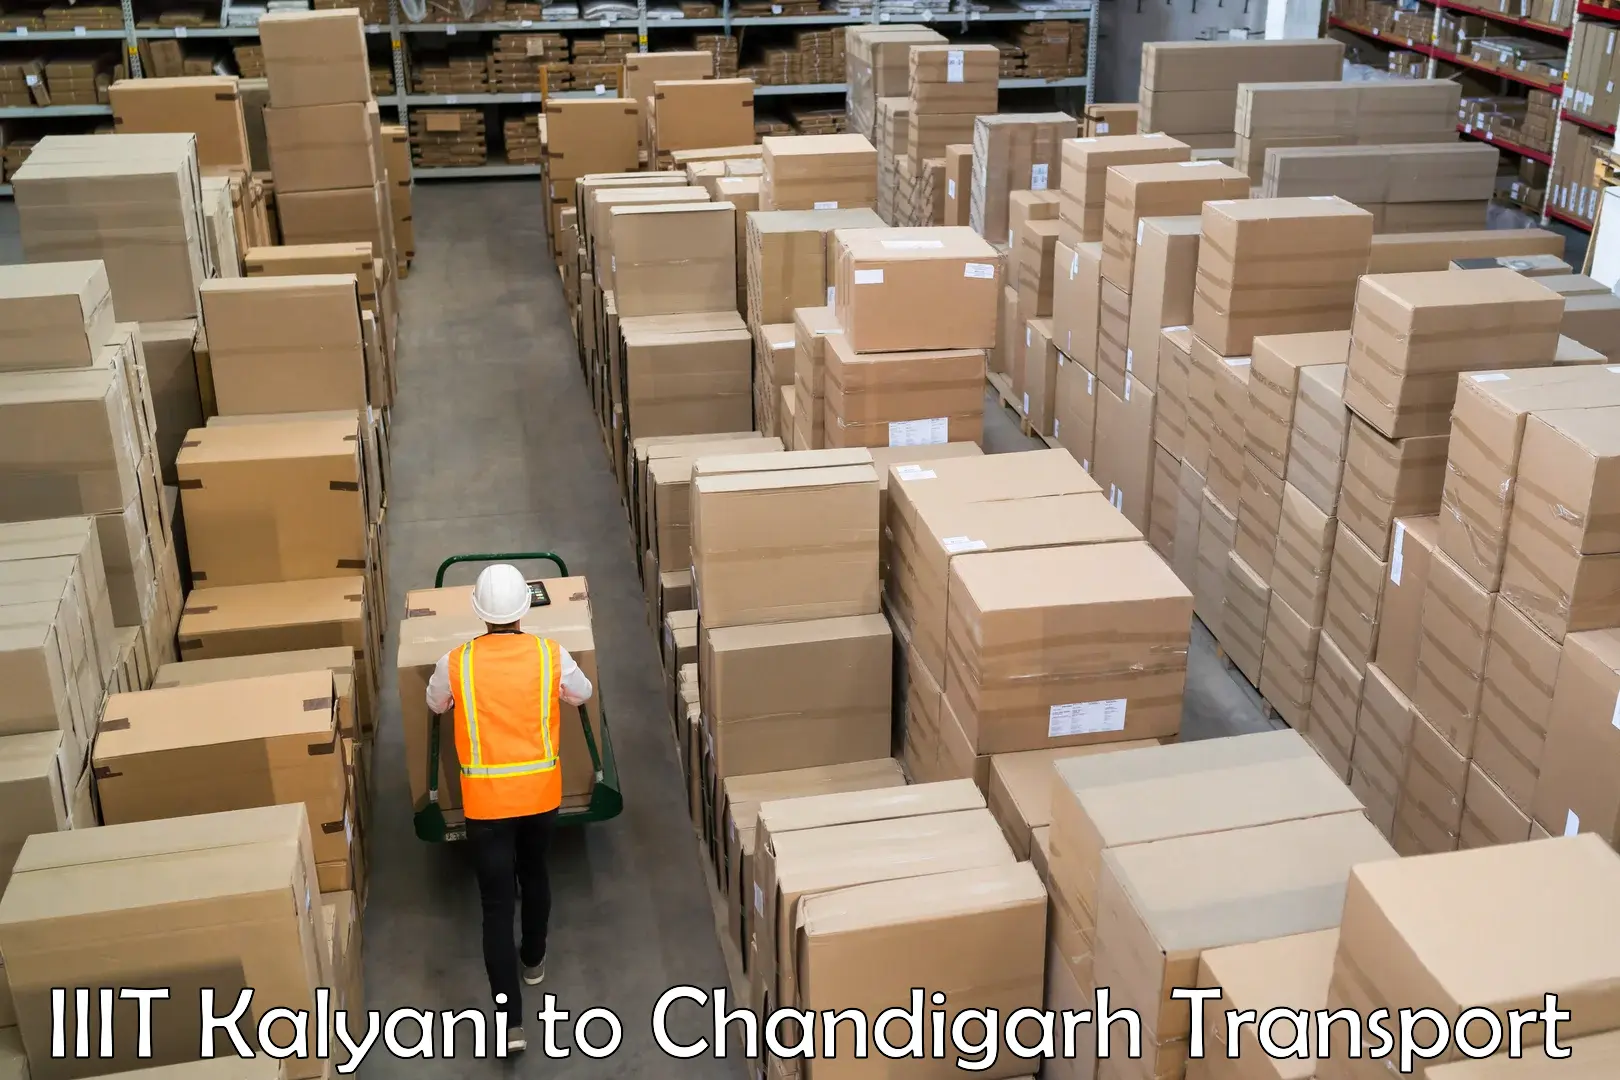 Daily parcel service transport IIIT Kalyani to Chandigarh